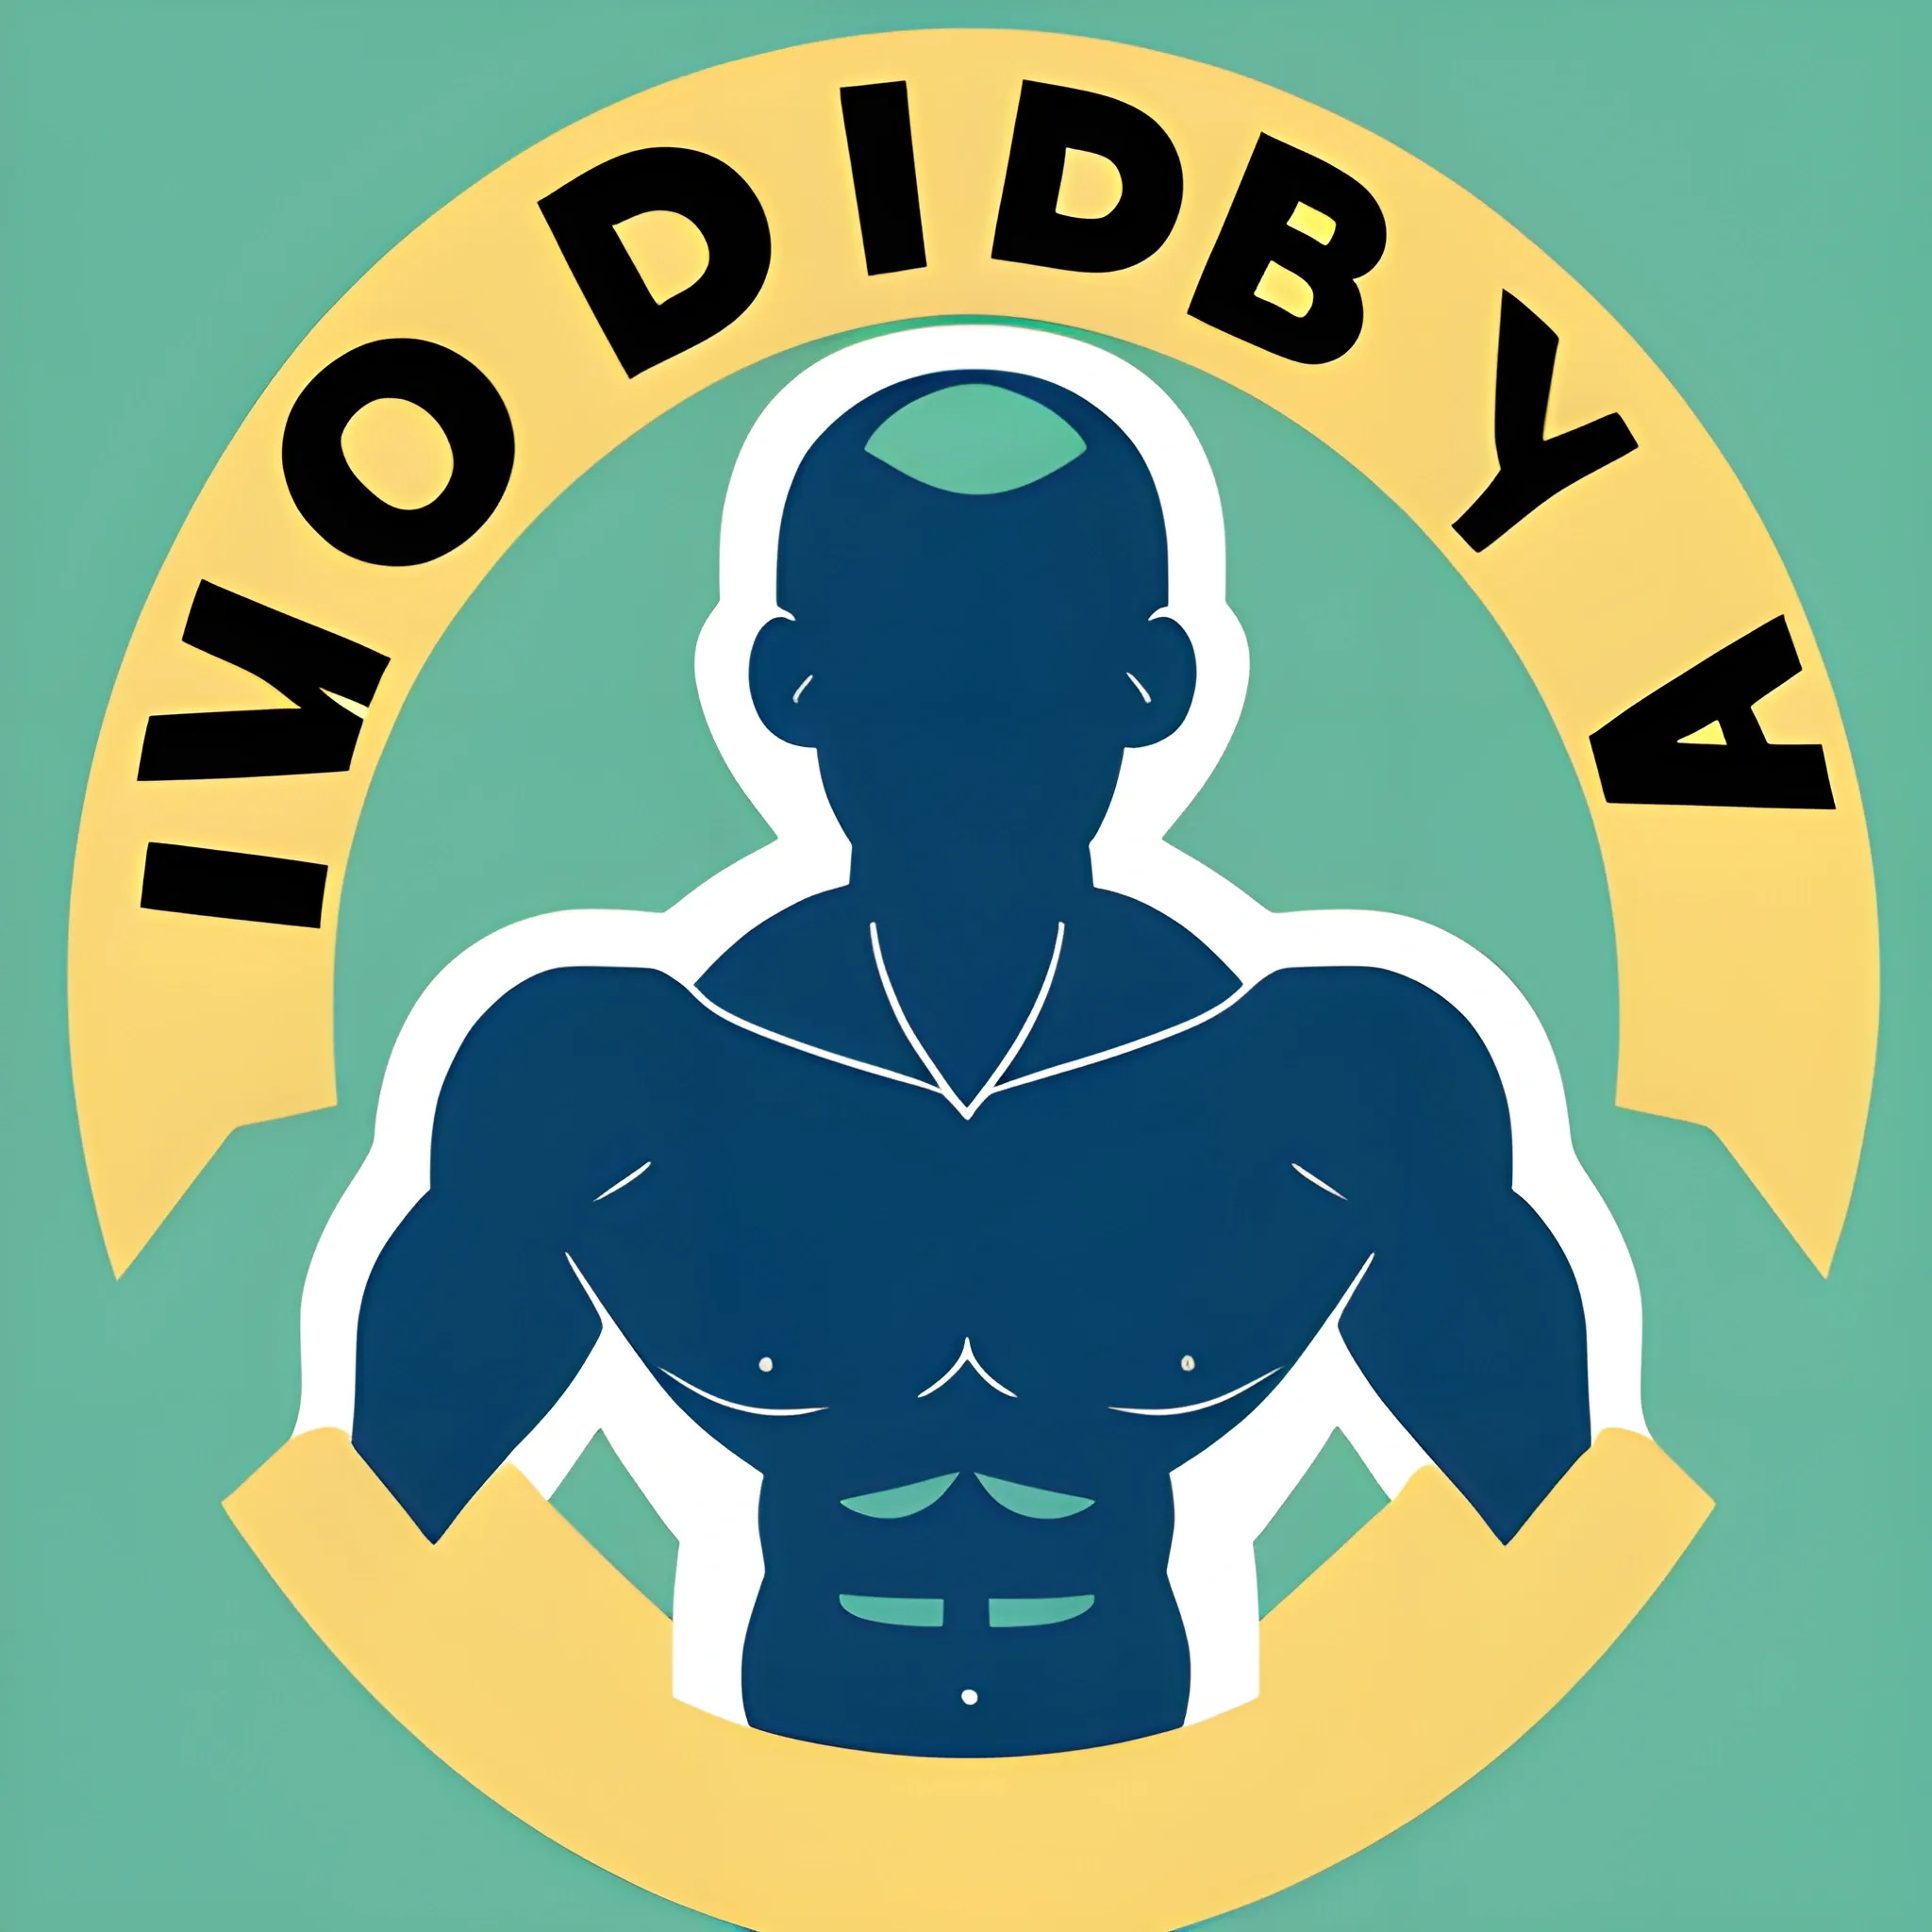 App Logo for a sportsapp named BodyBuddy